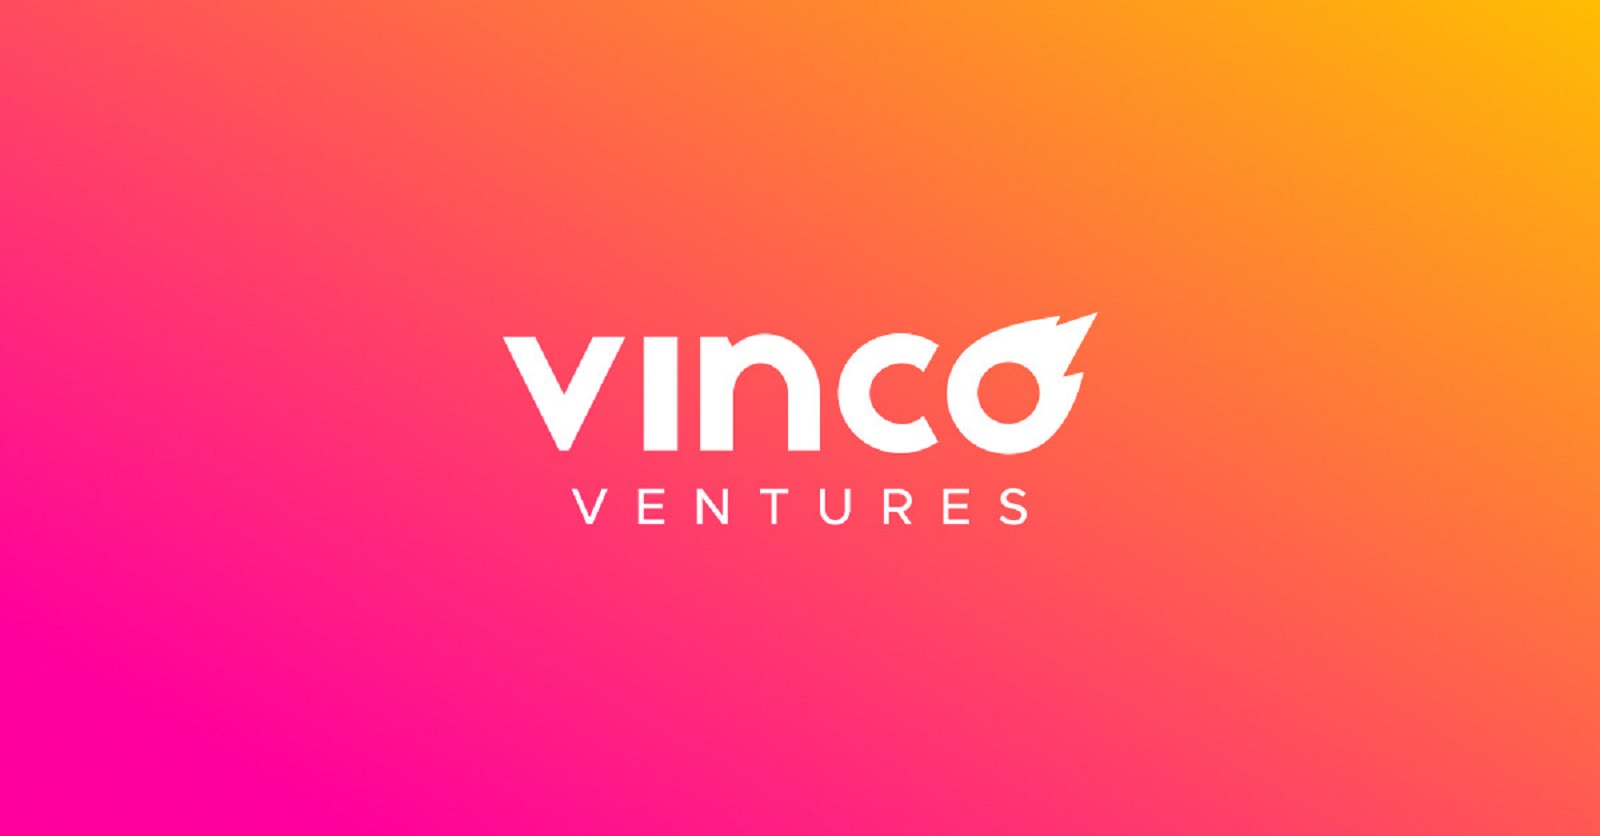 vinco ventures logo on an orange/red background representing BBIG stock.